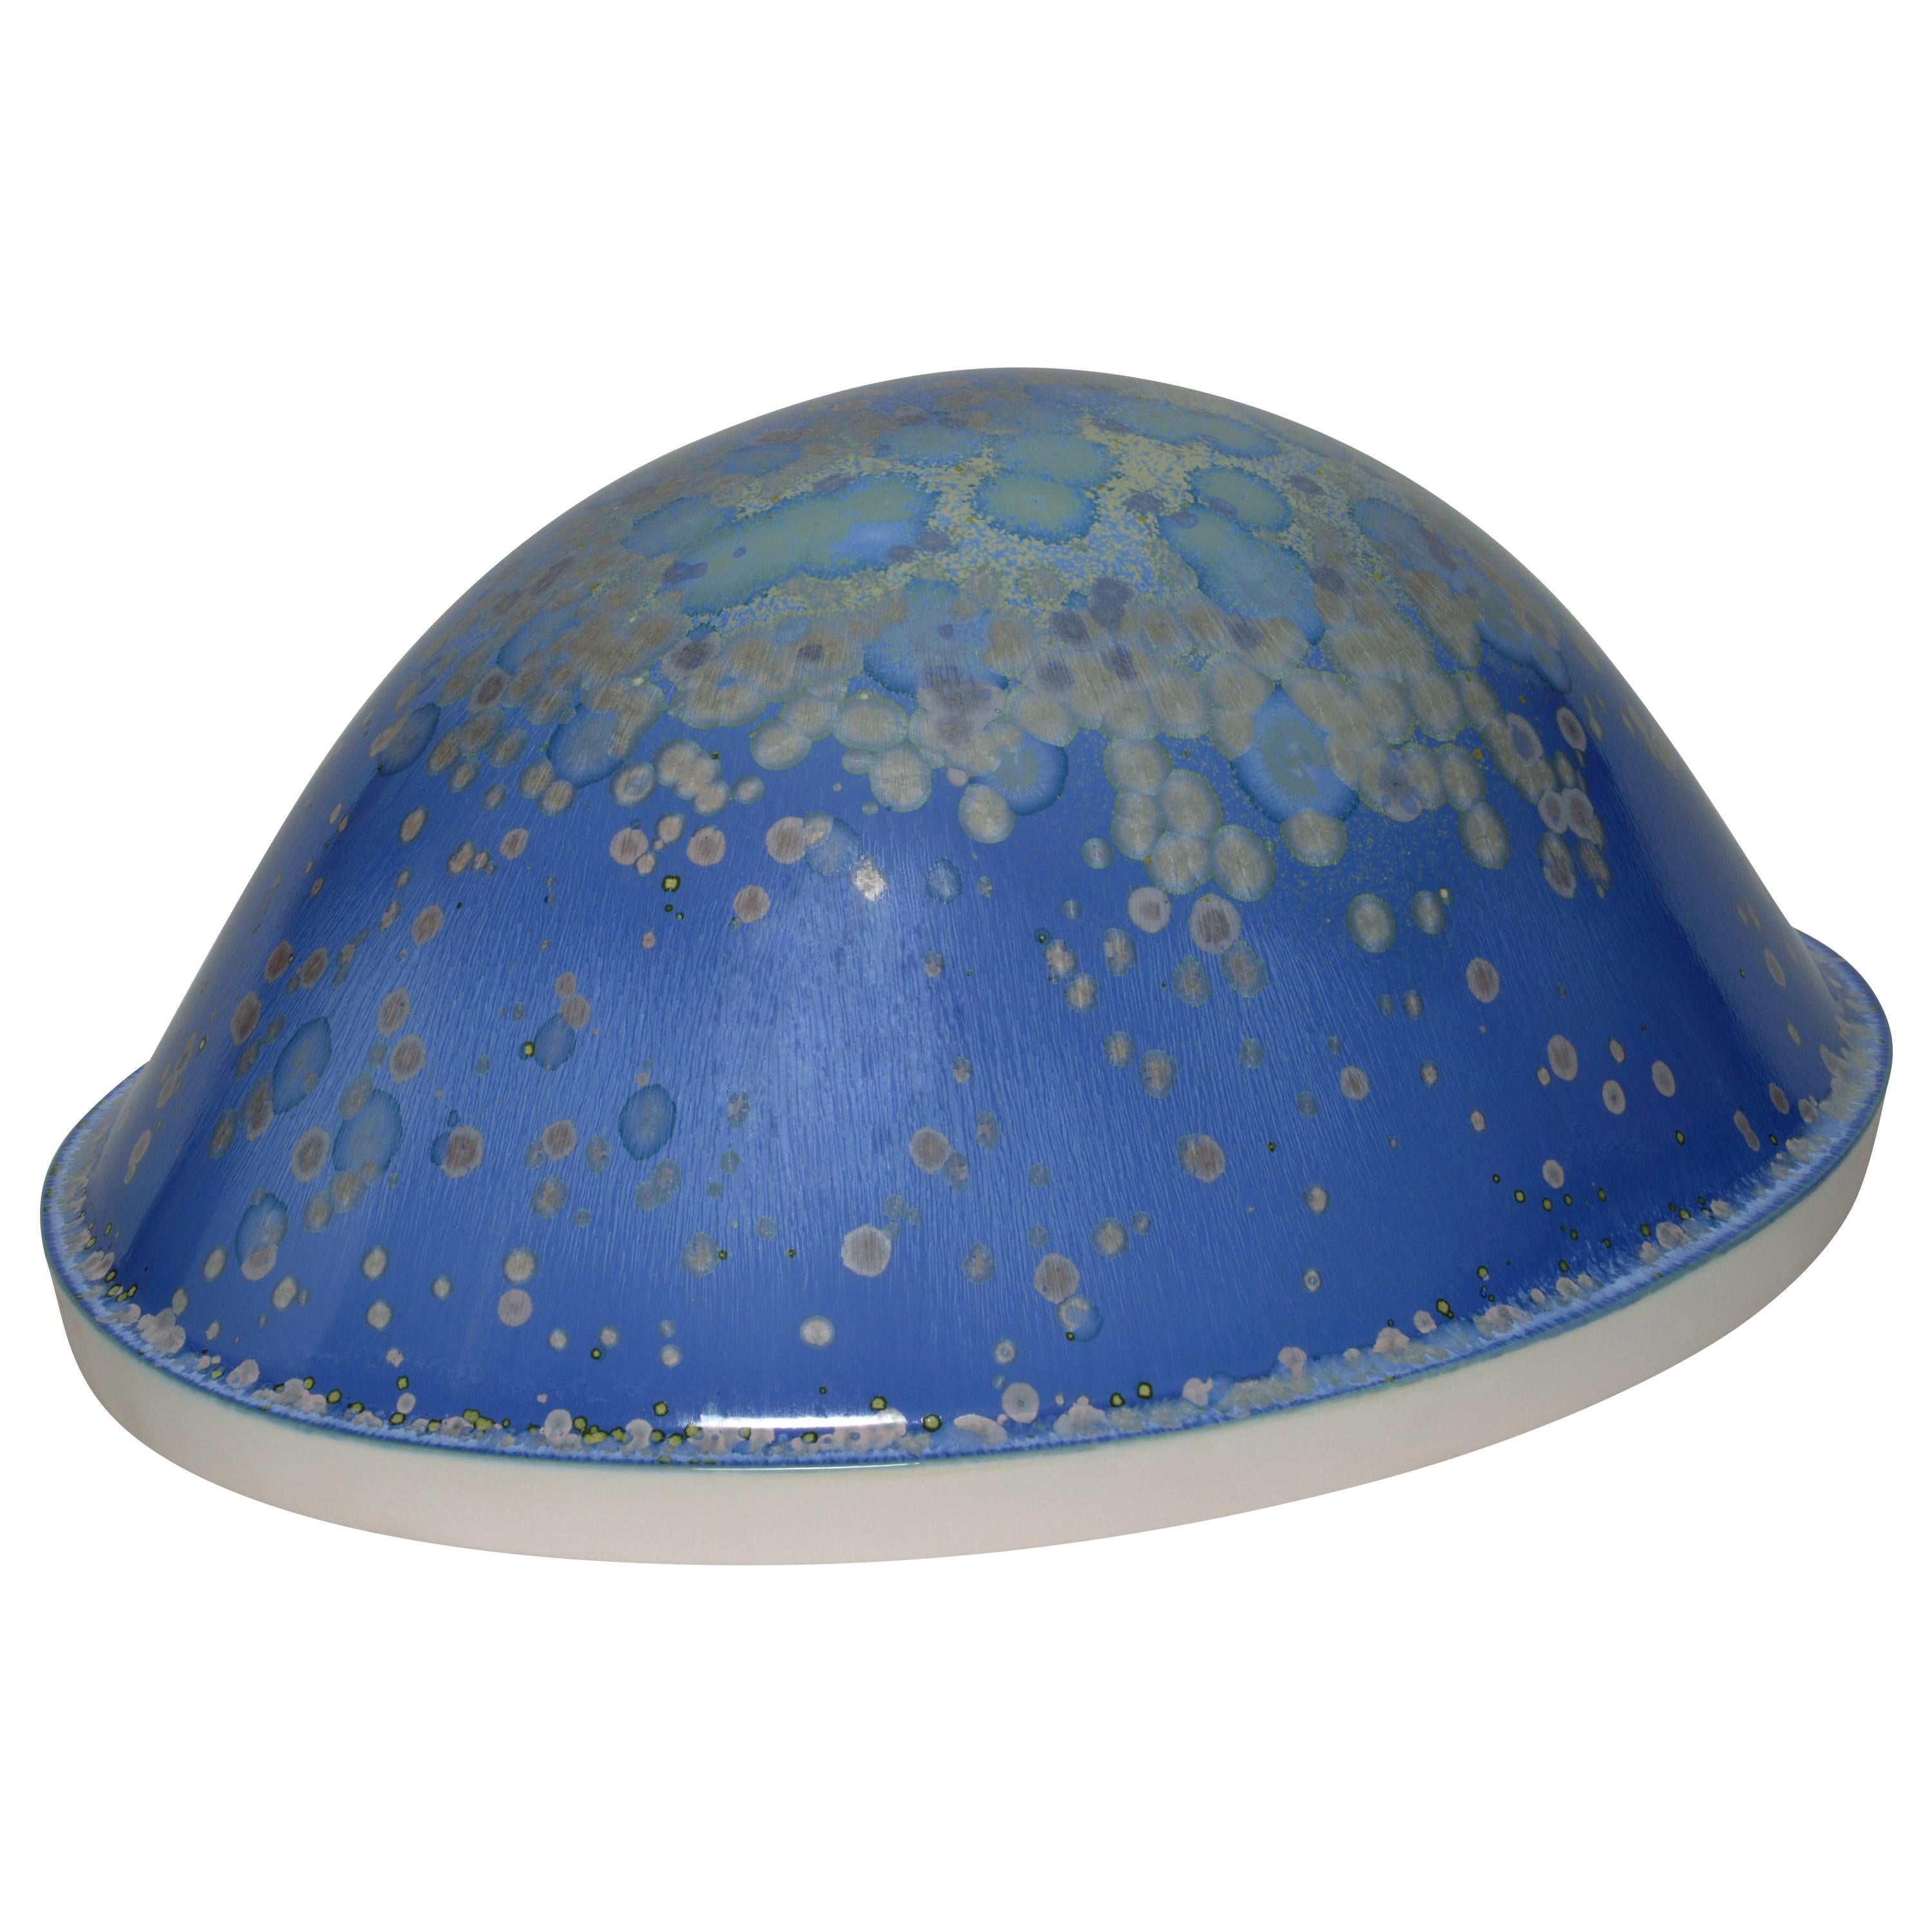 A. Bakker Dome in Blue Porcelain by Manufacture Nationale de Sèvres For Sale